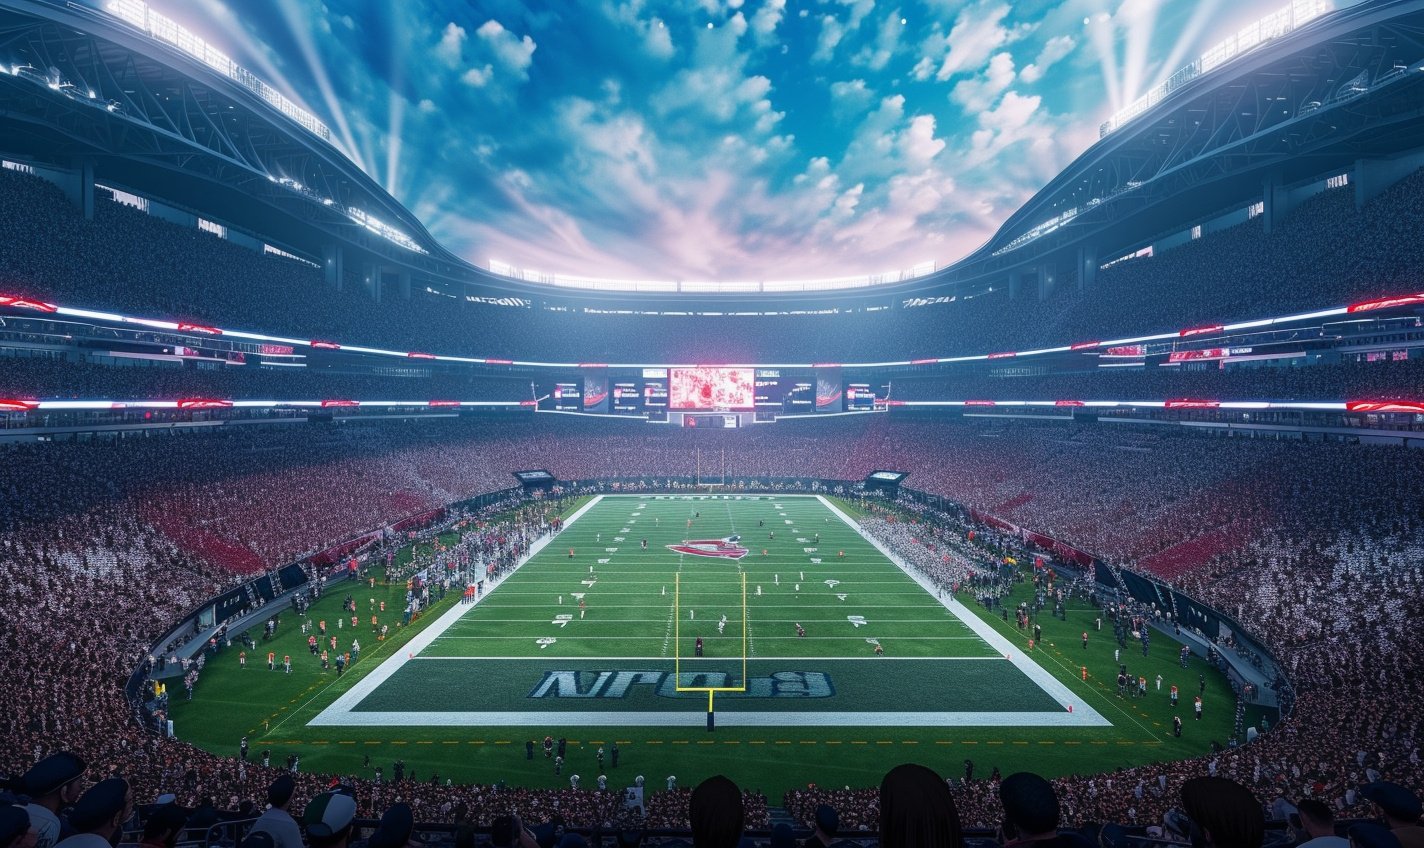 Illustration: Fiktives NFL Stadion mit Blick auf ein Football Field